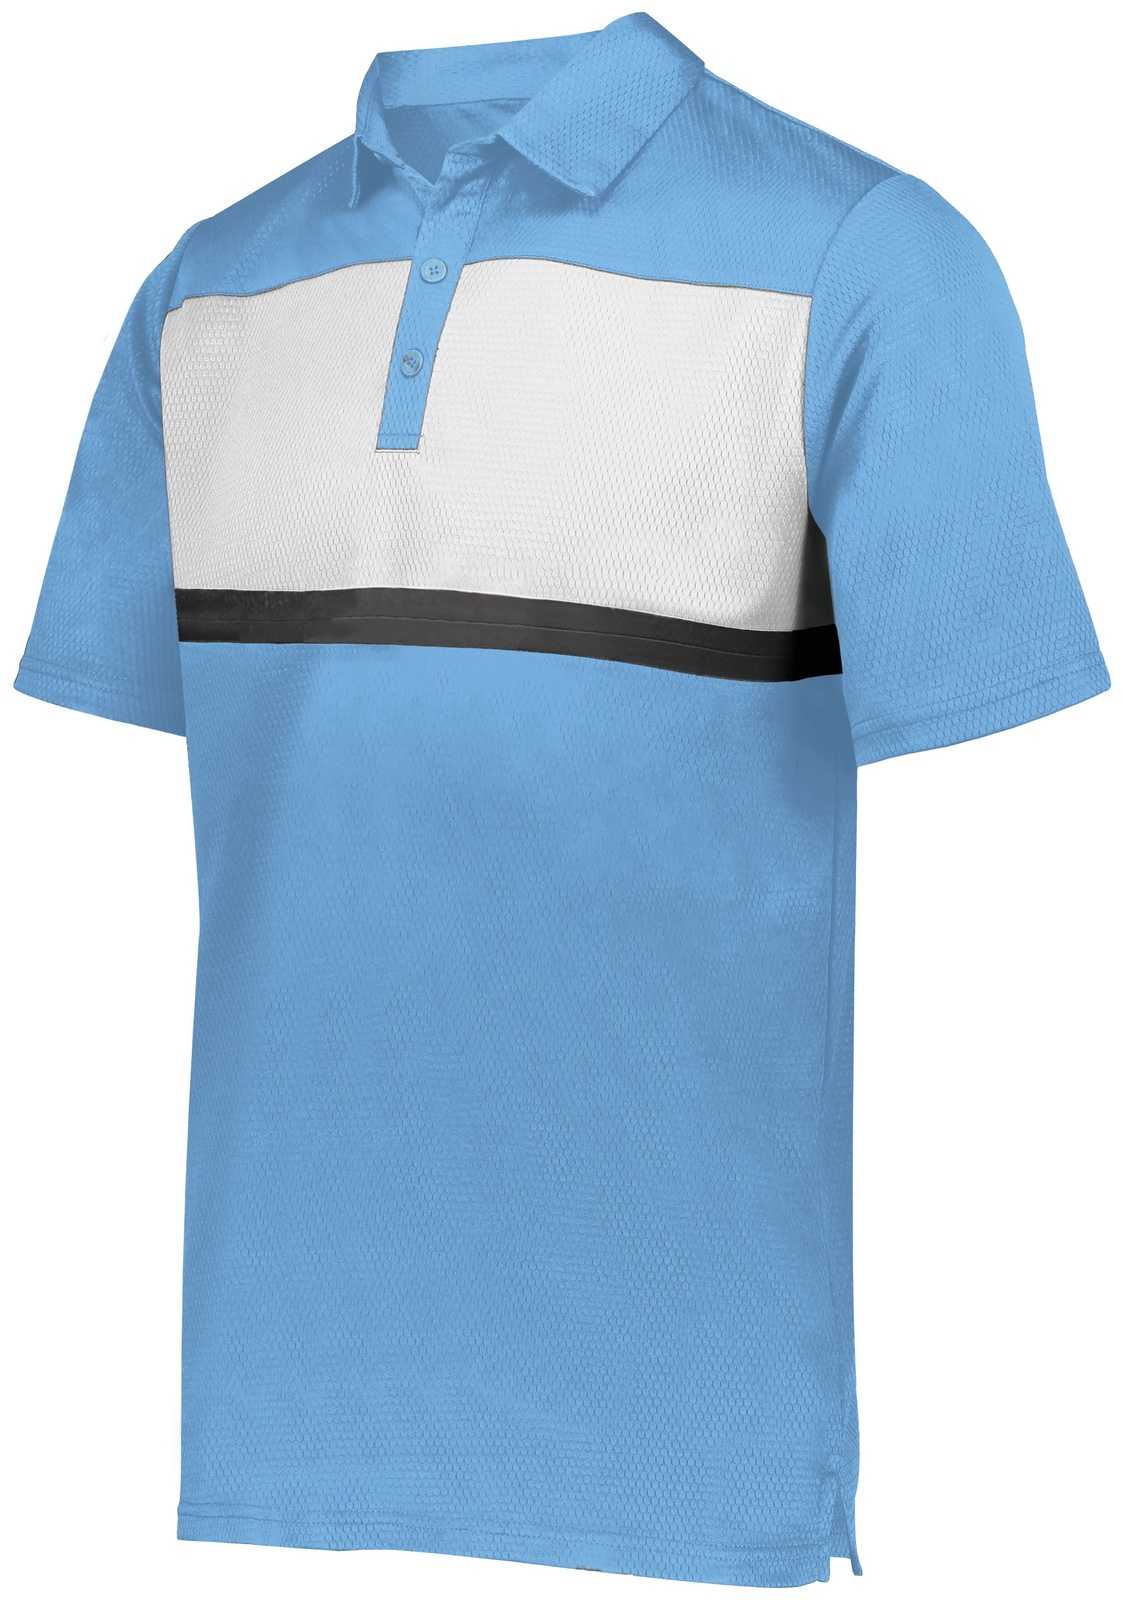 Official Miami Heat Columbia Polos, Polo Shirts, Golf Shirts